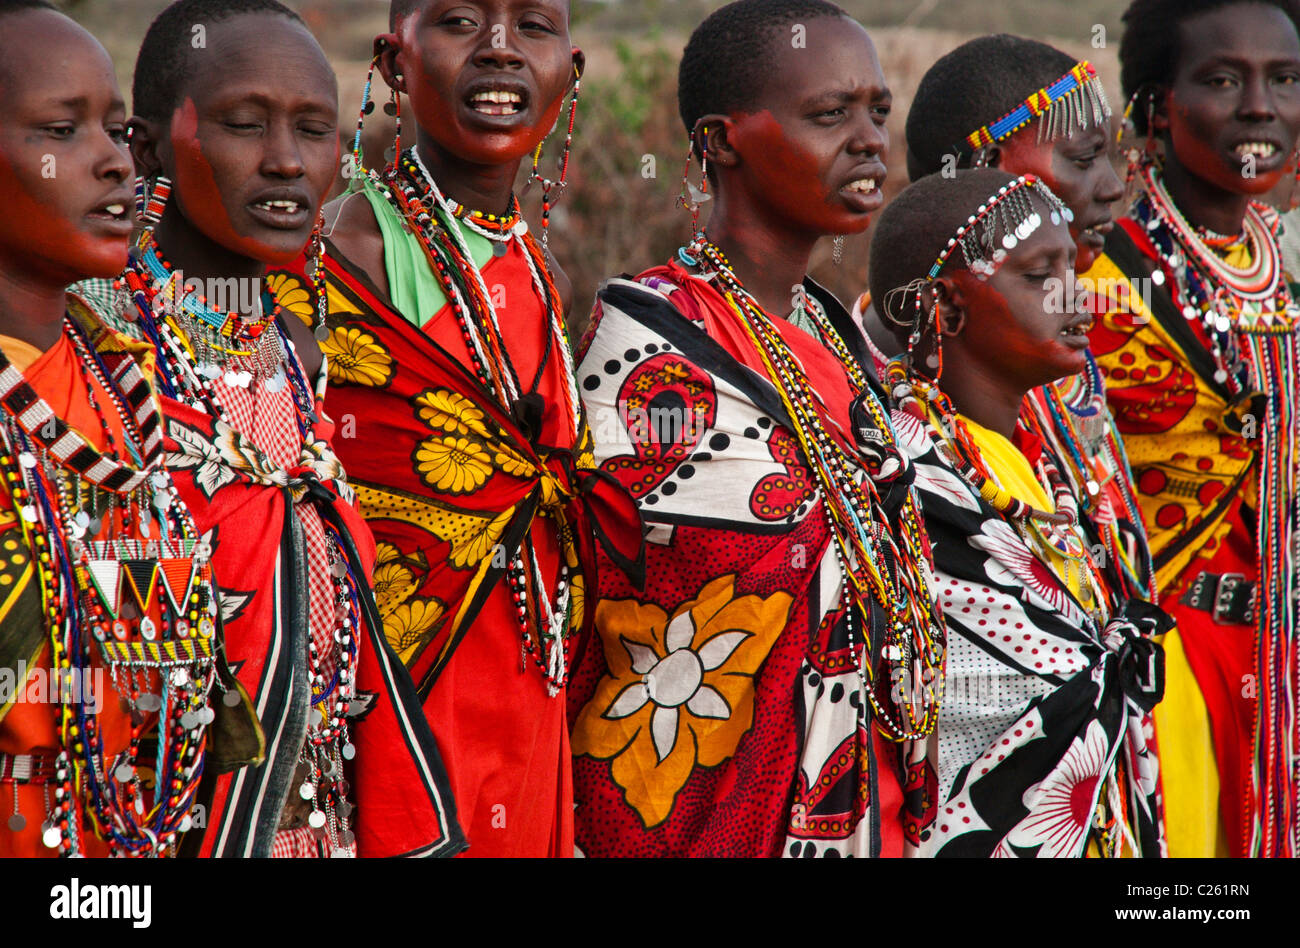 Masai women wearing traditional dress, in a village near the Masai Mara, Kenya, East Africa Stock Photo